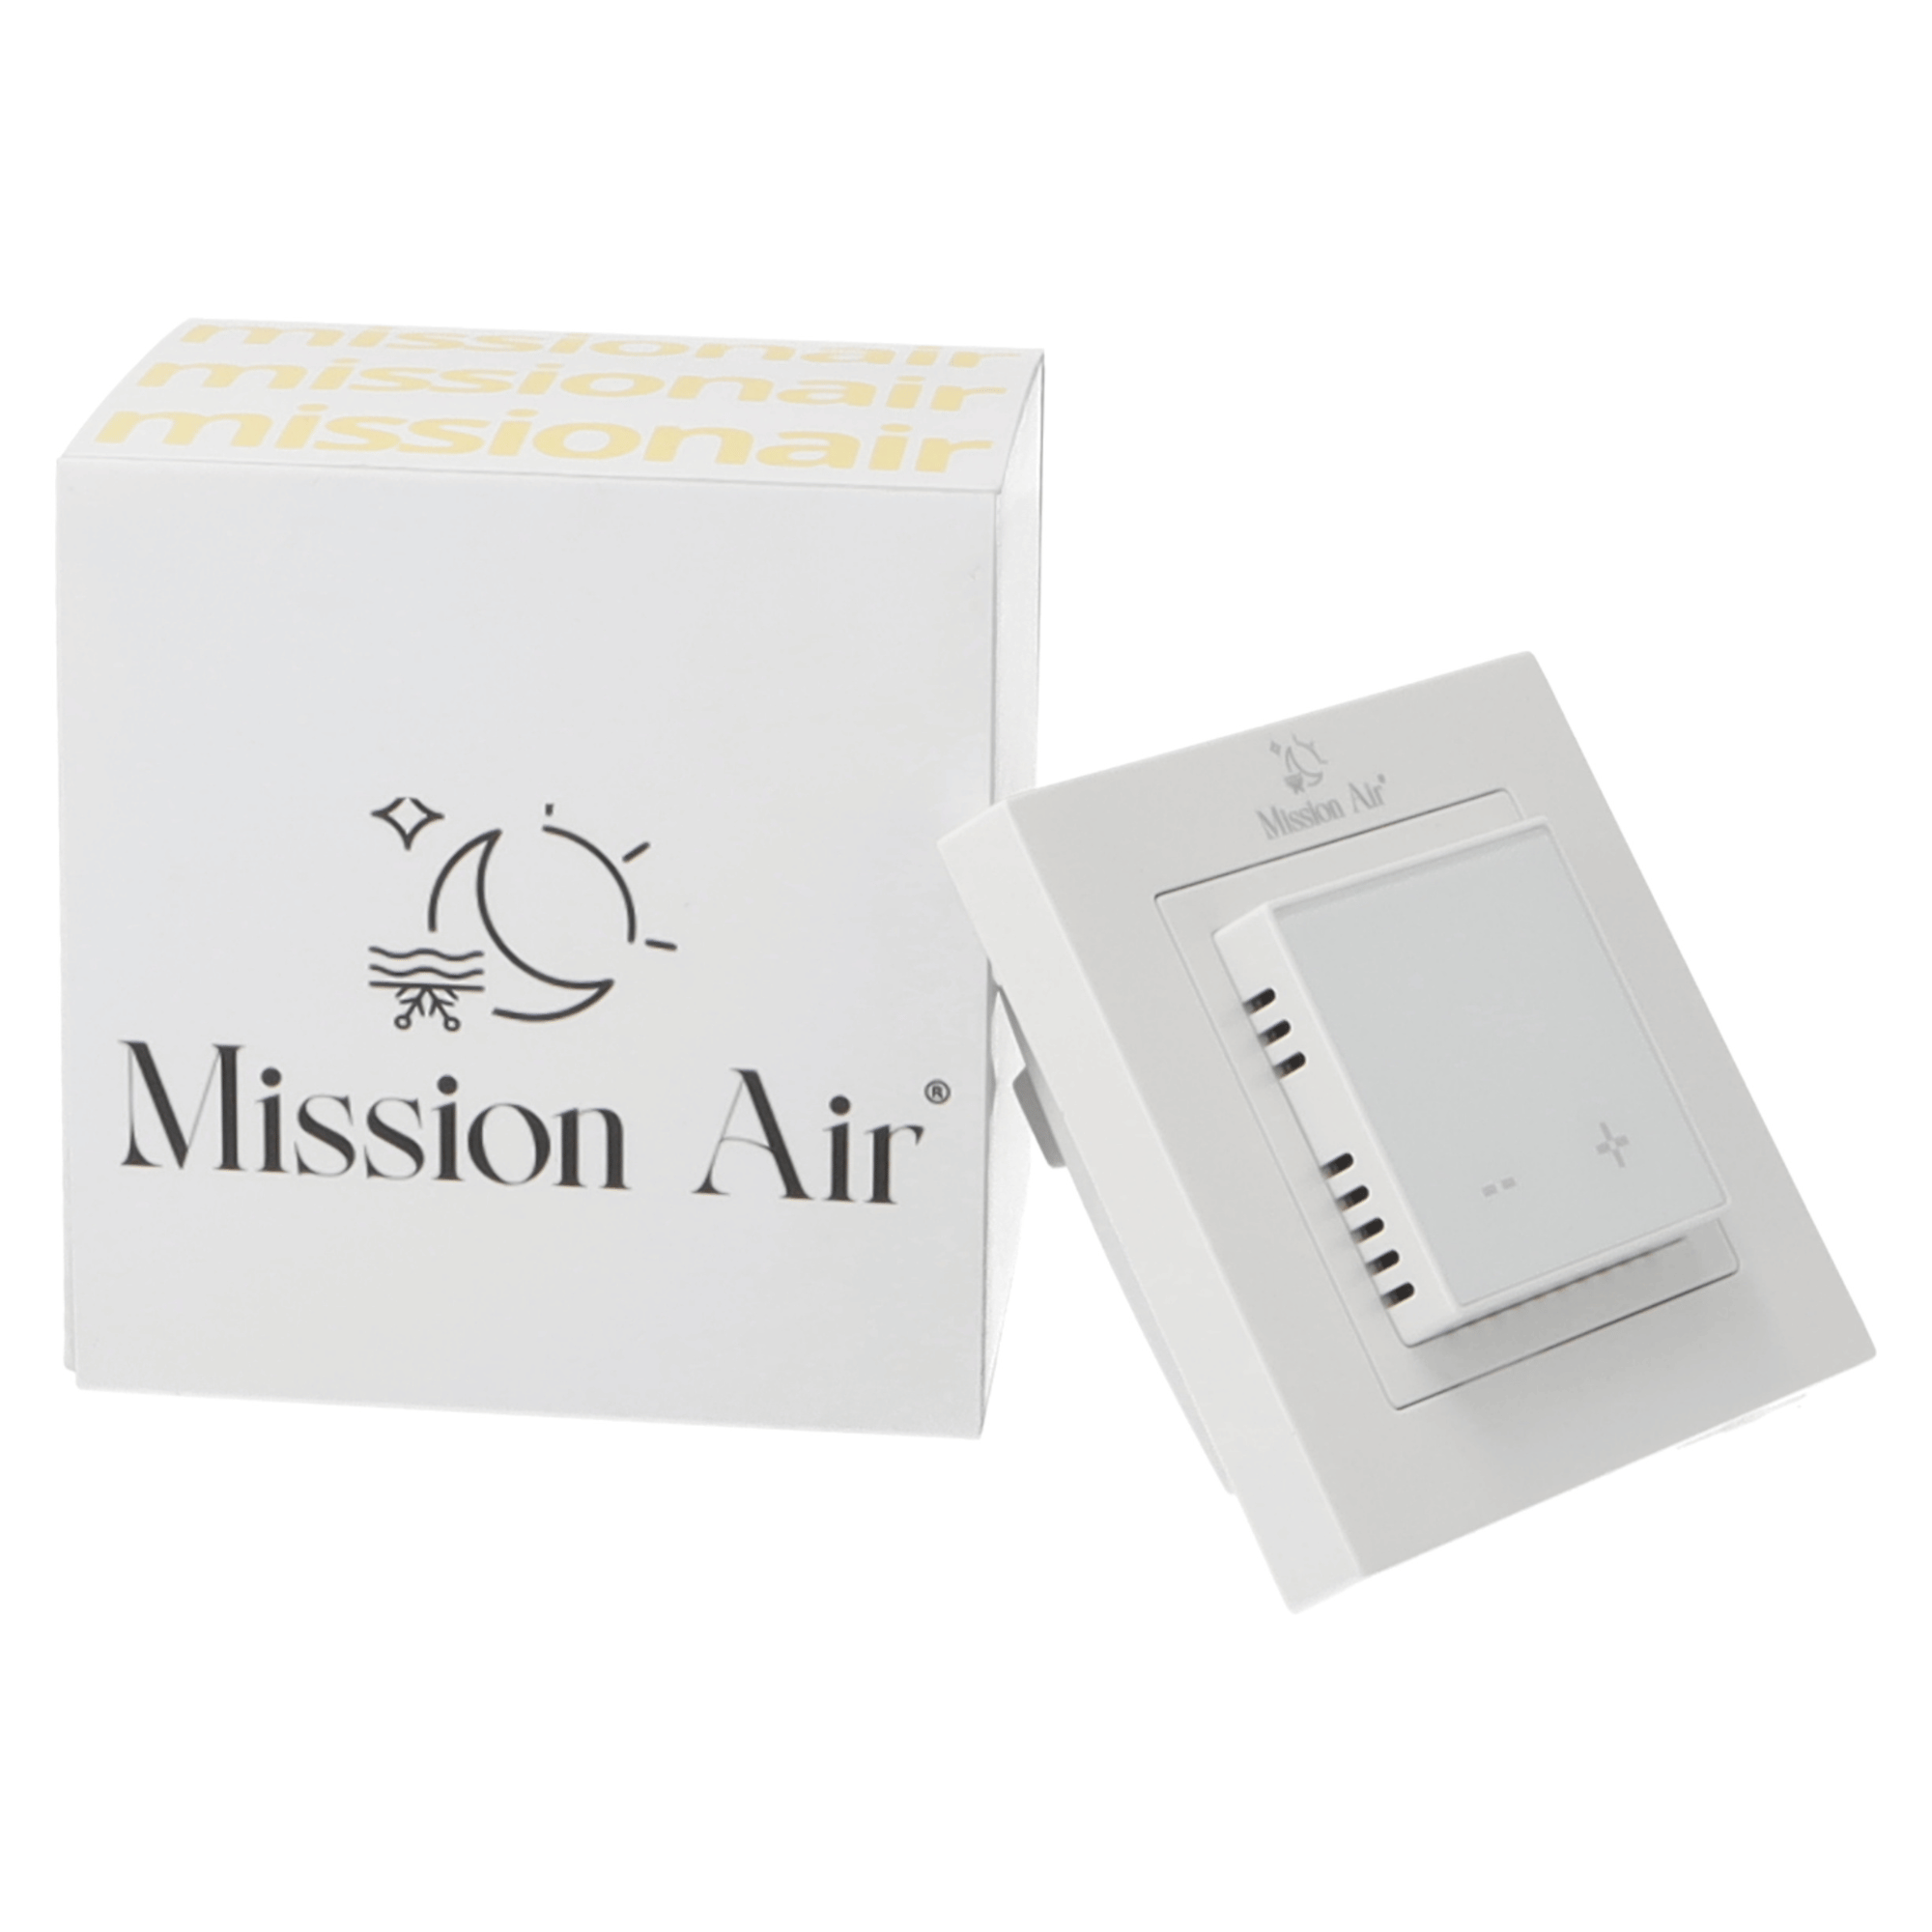 mission air, missionair,Regulator manualny Aries LCD